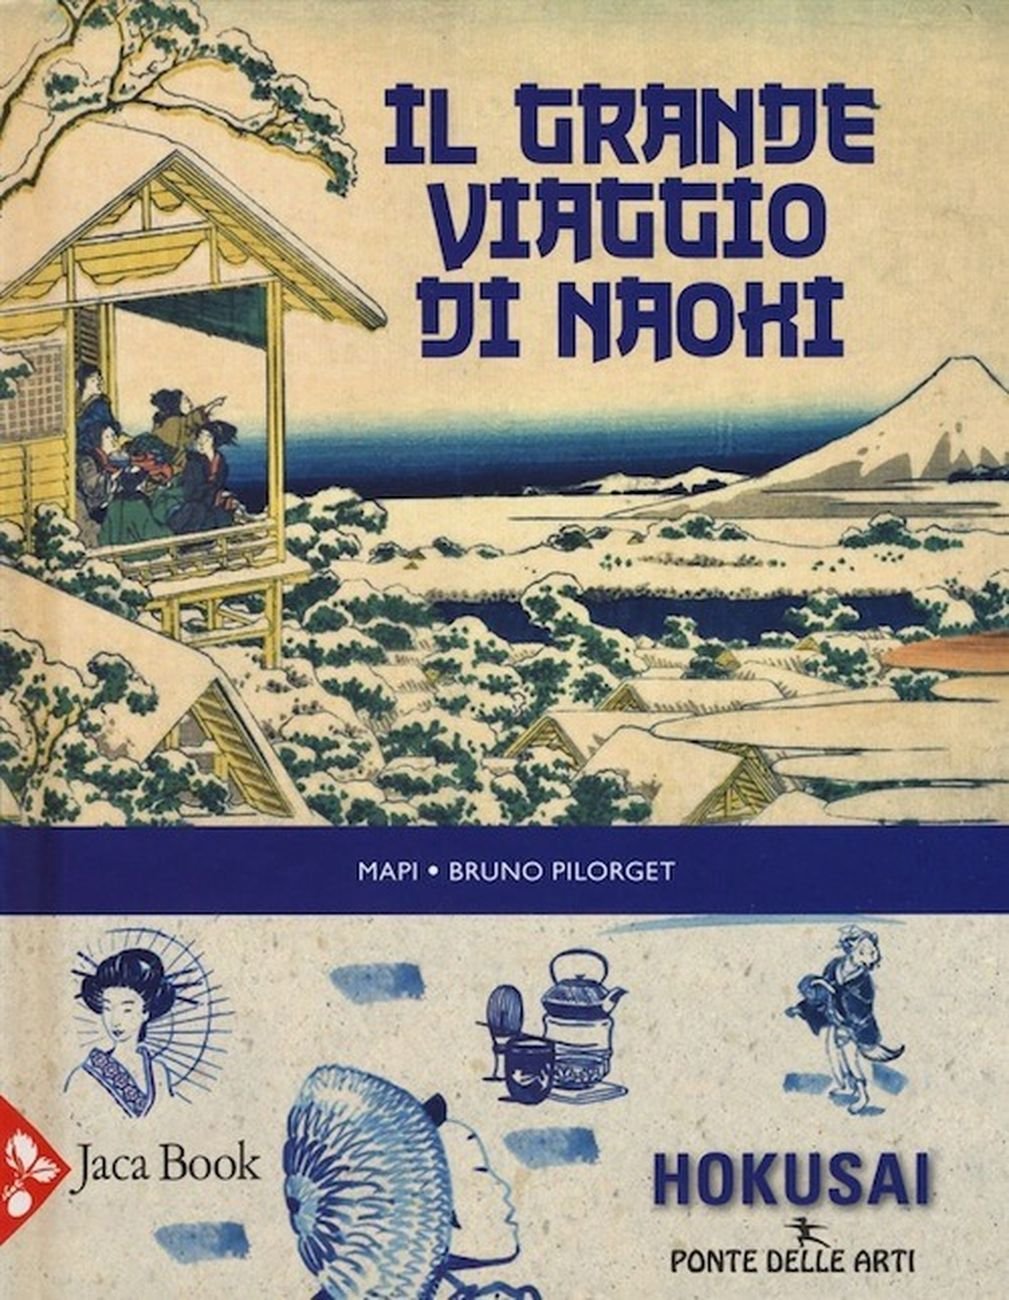 Mariapaola Pesce aka Mapi & Bruno Pilorget – Il grande viaggio di Naoki (Jaca Book, Milano 2019). Copertina